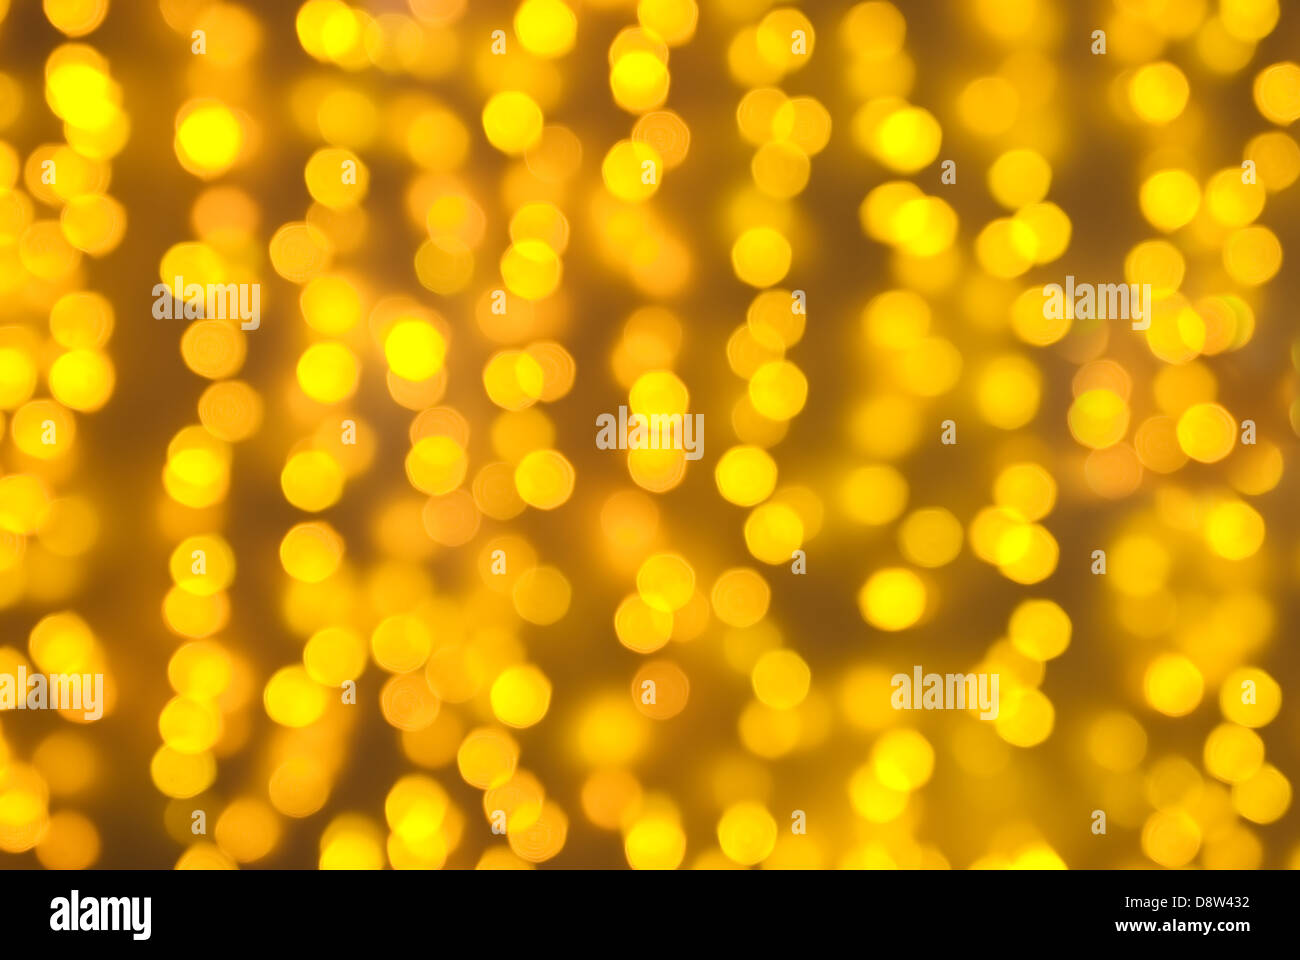 golden illumination background Stock Photo